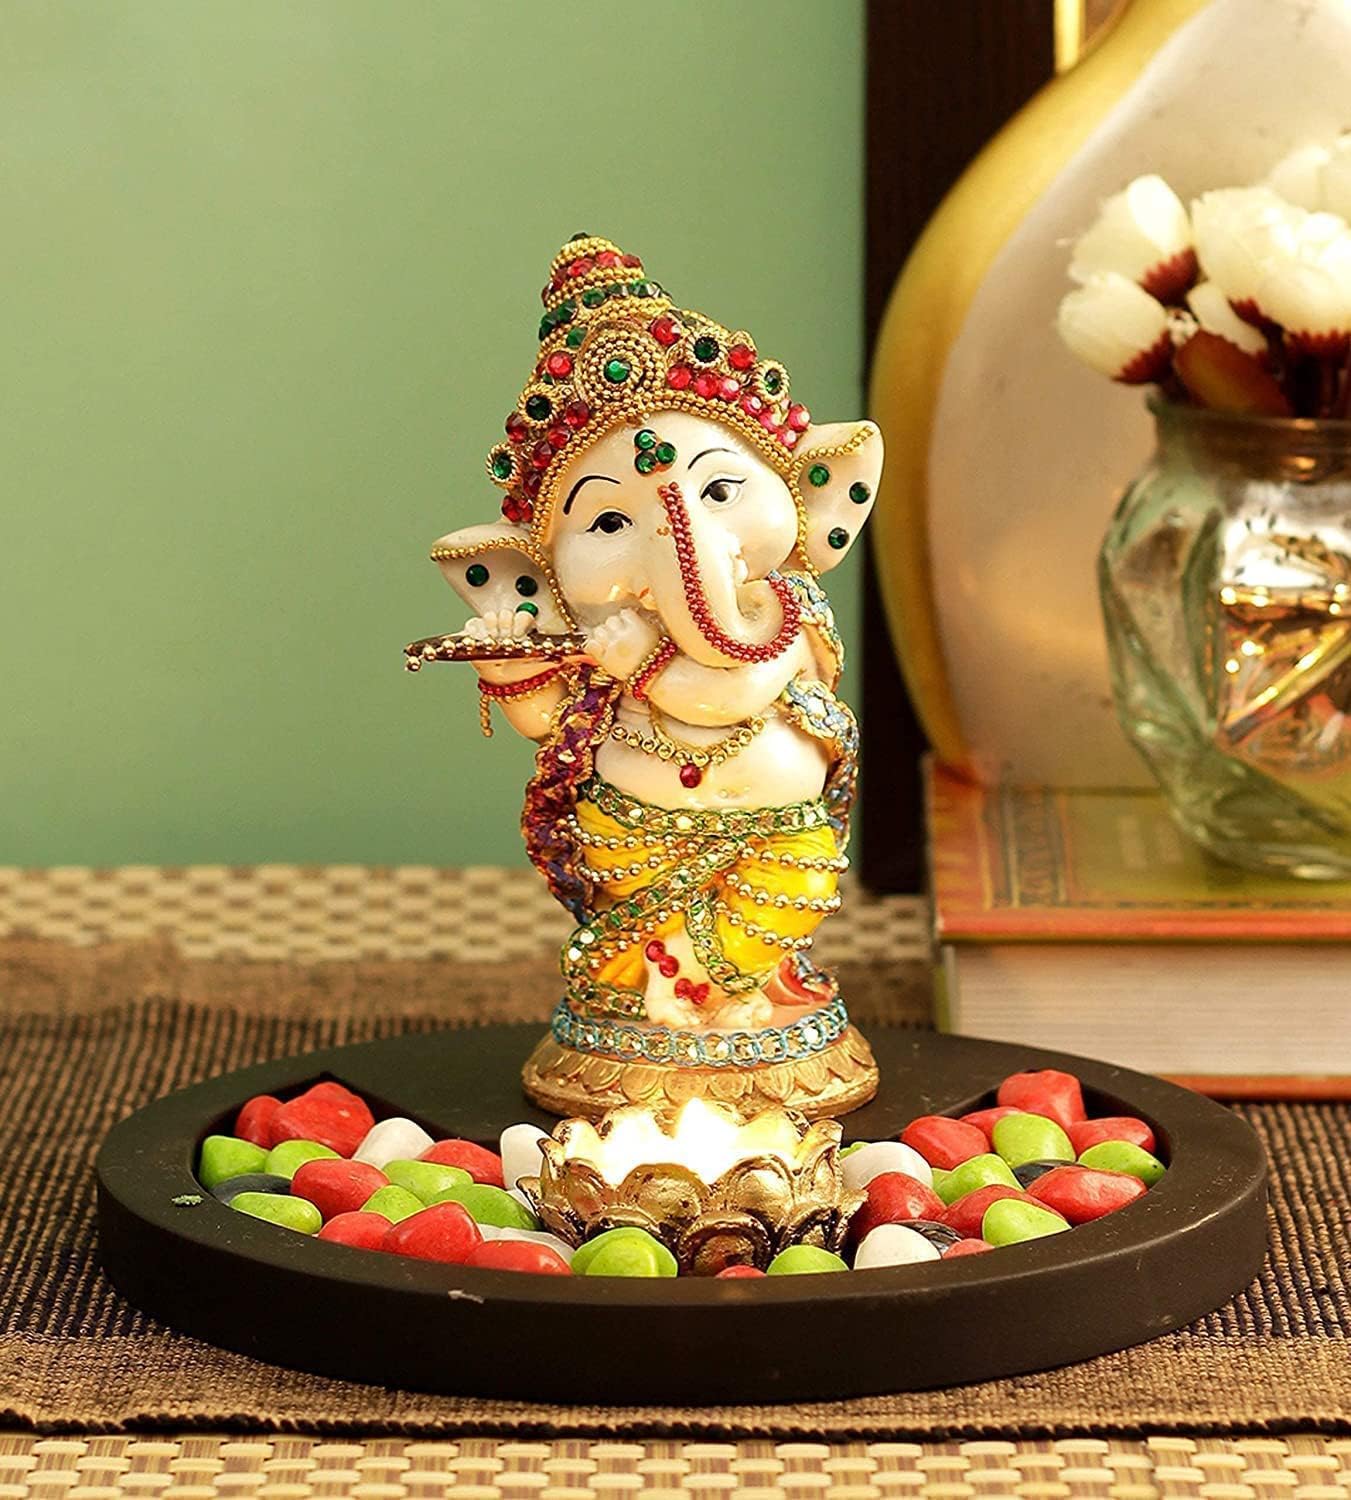 TIED RIBBONS Ganesh Statue (5.5 inch x 2.3 inch, Multicolor) - Ganesha Idol for Table Desktop Indian God Idol Figurine Gifts